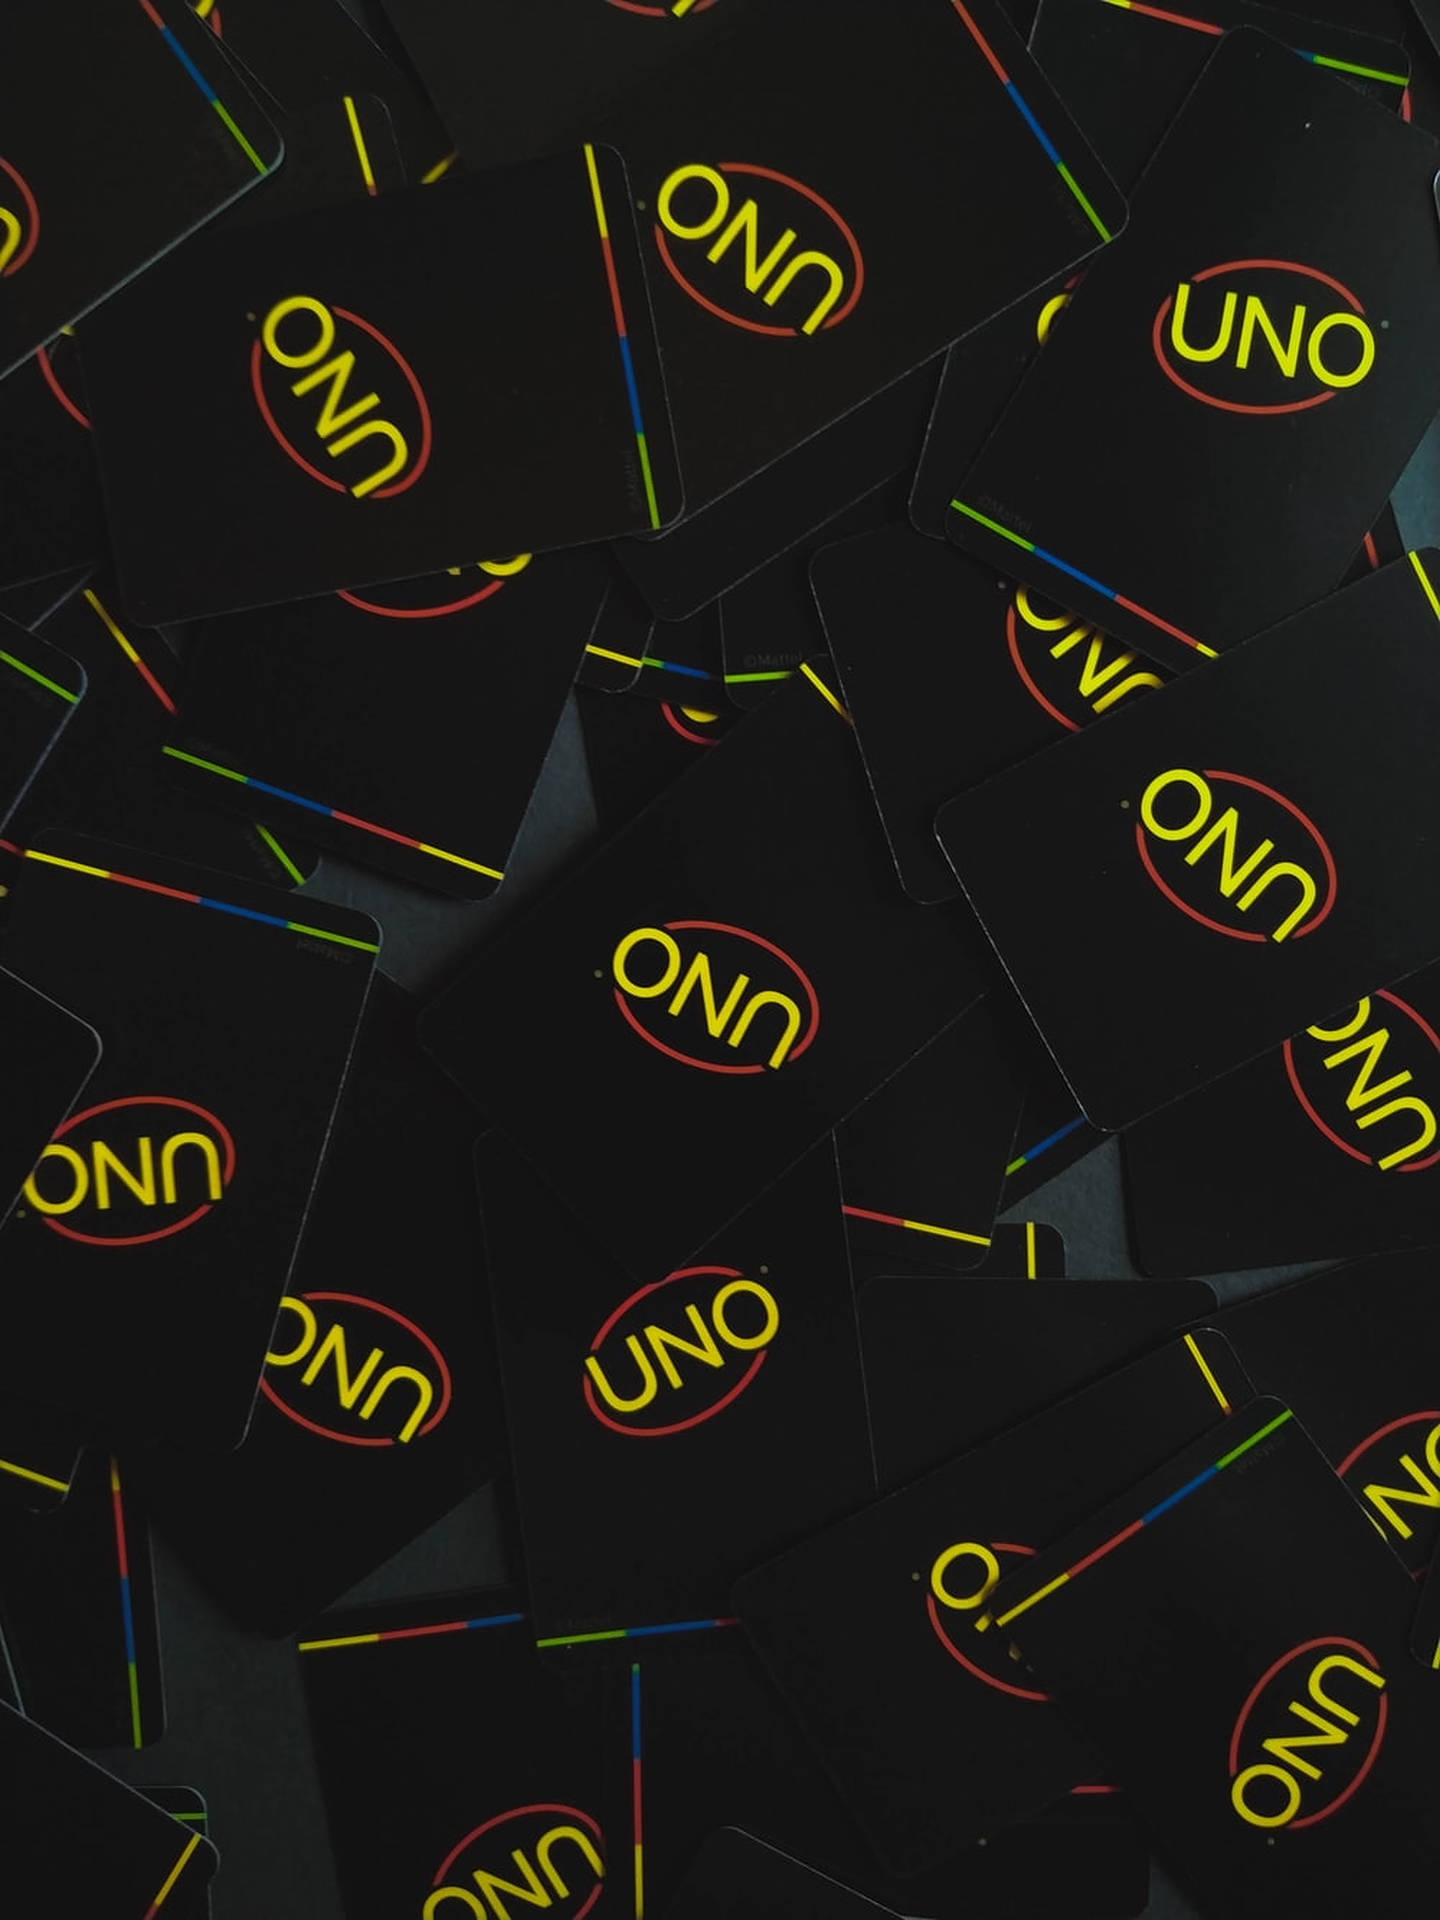 A Minimalist Design of an Uno Card Deck Wallpaper